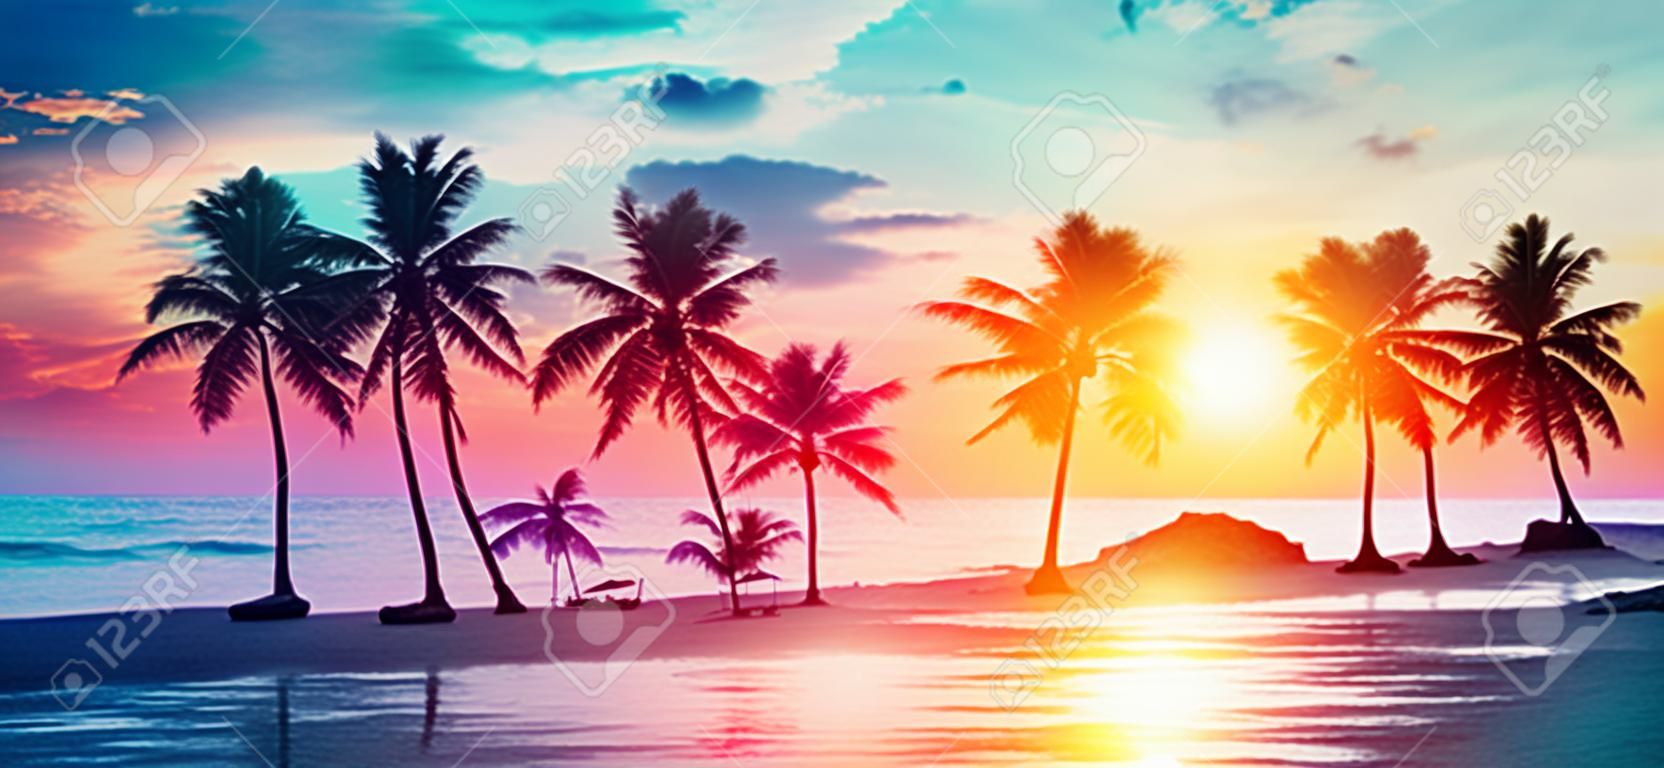 Palmbomen Silhouettes op tropisch strand bij zonsondergang - Moderne vintage kleuren